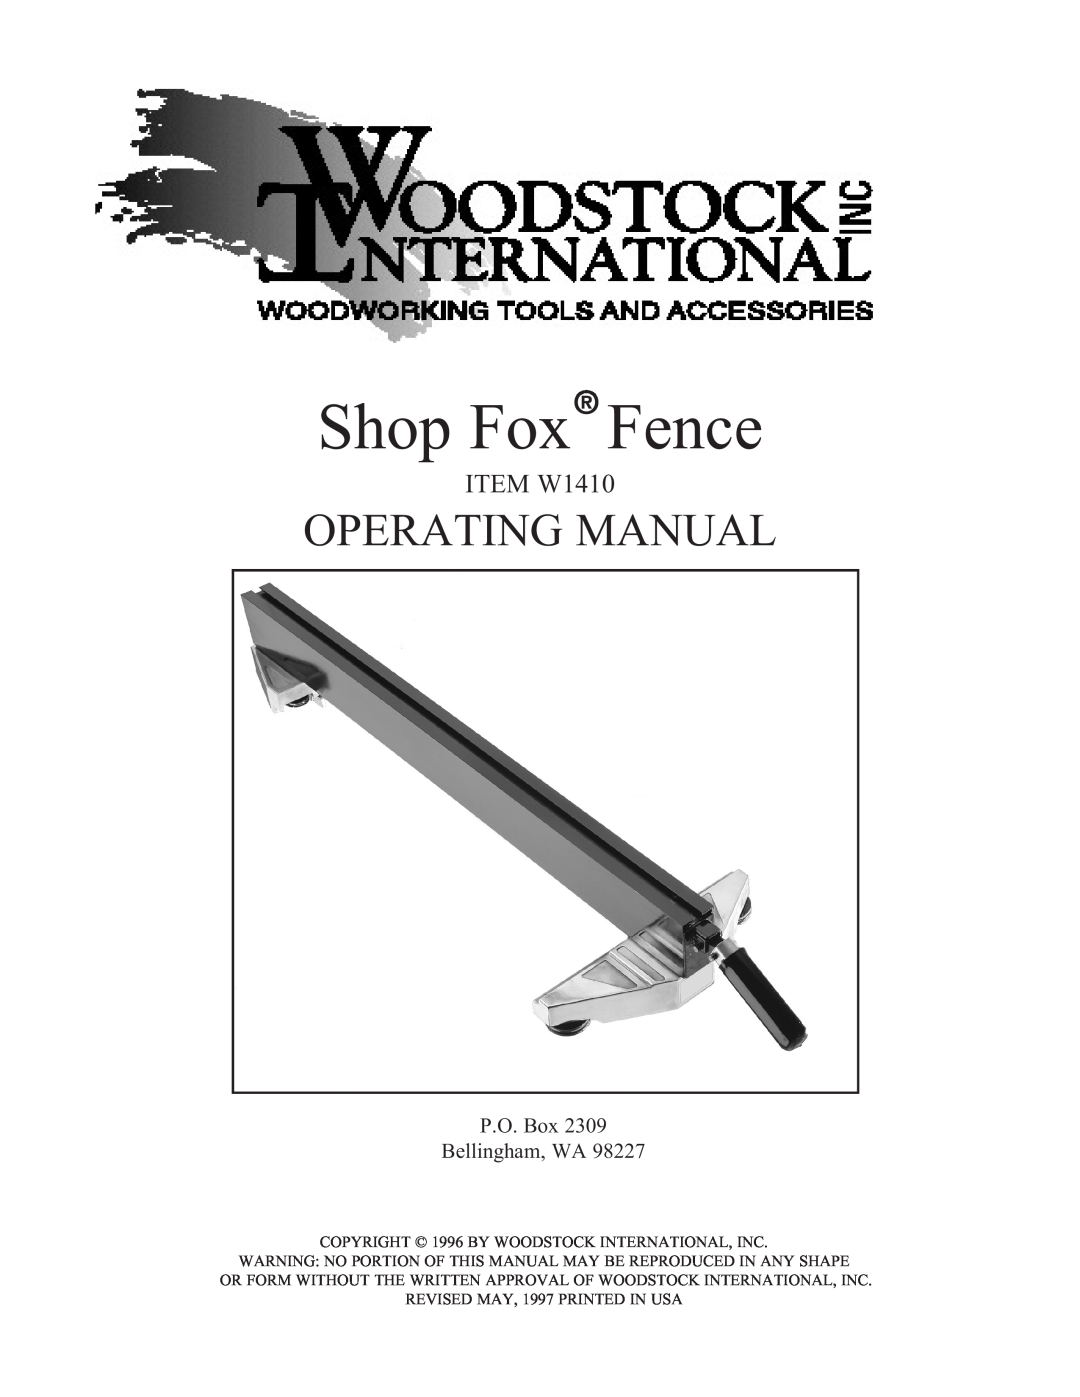 Woodstock manual Shop Fox Fence, Operating Manual, ITEM W1410, COPYRIGHT 1996 BY WOODSTOCK INTERNATIONAL, INC 